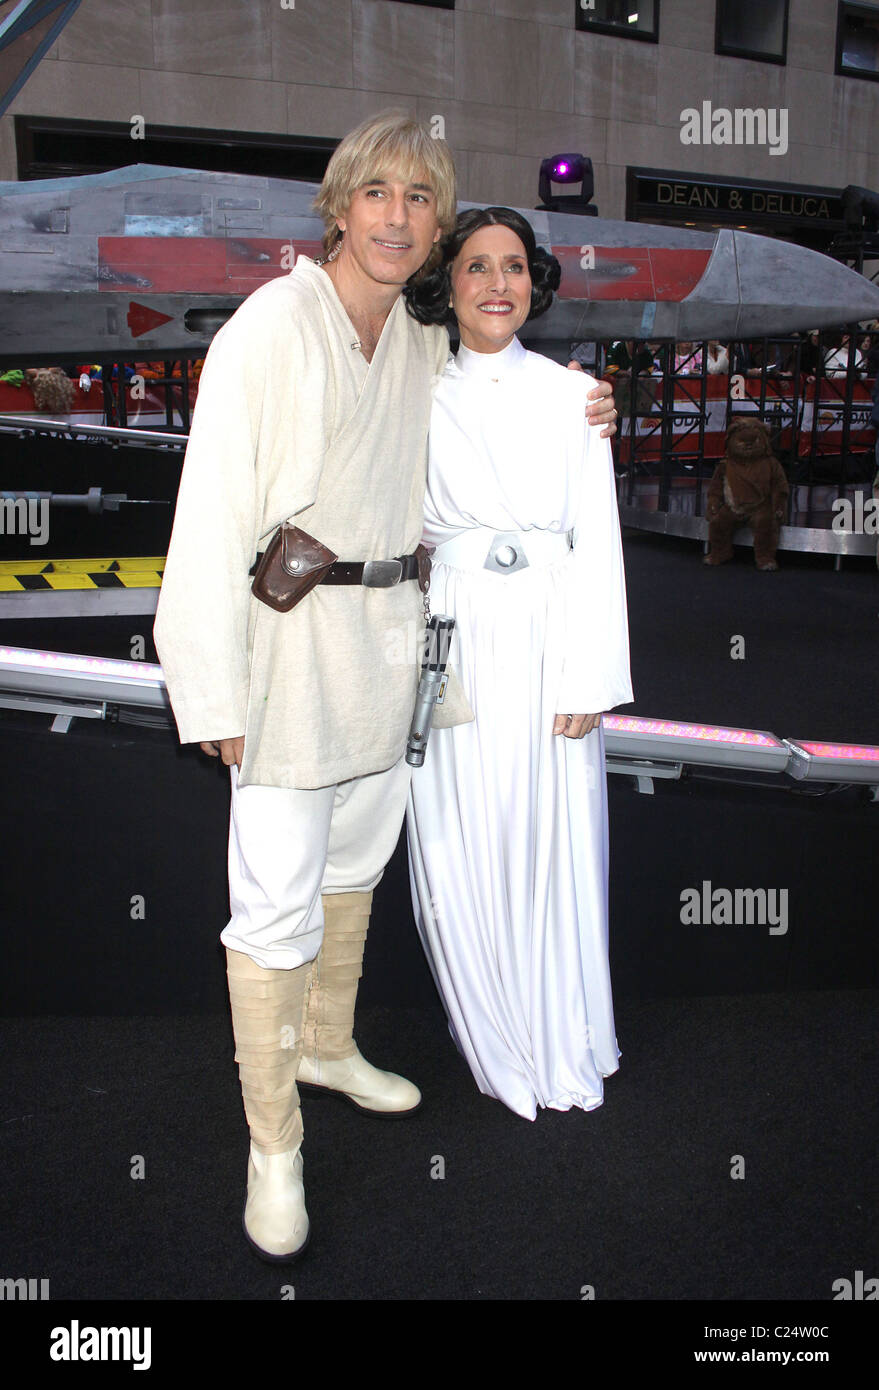 Matt Lauer as Luke Skywalker and Meredith Vieira as Princess Leia NBC's 'Today Show' anchors dress as the cast of 'Star Wars' Stock Photo